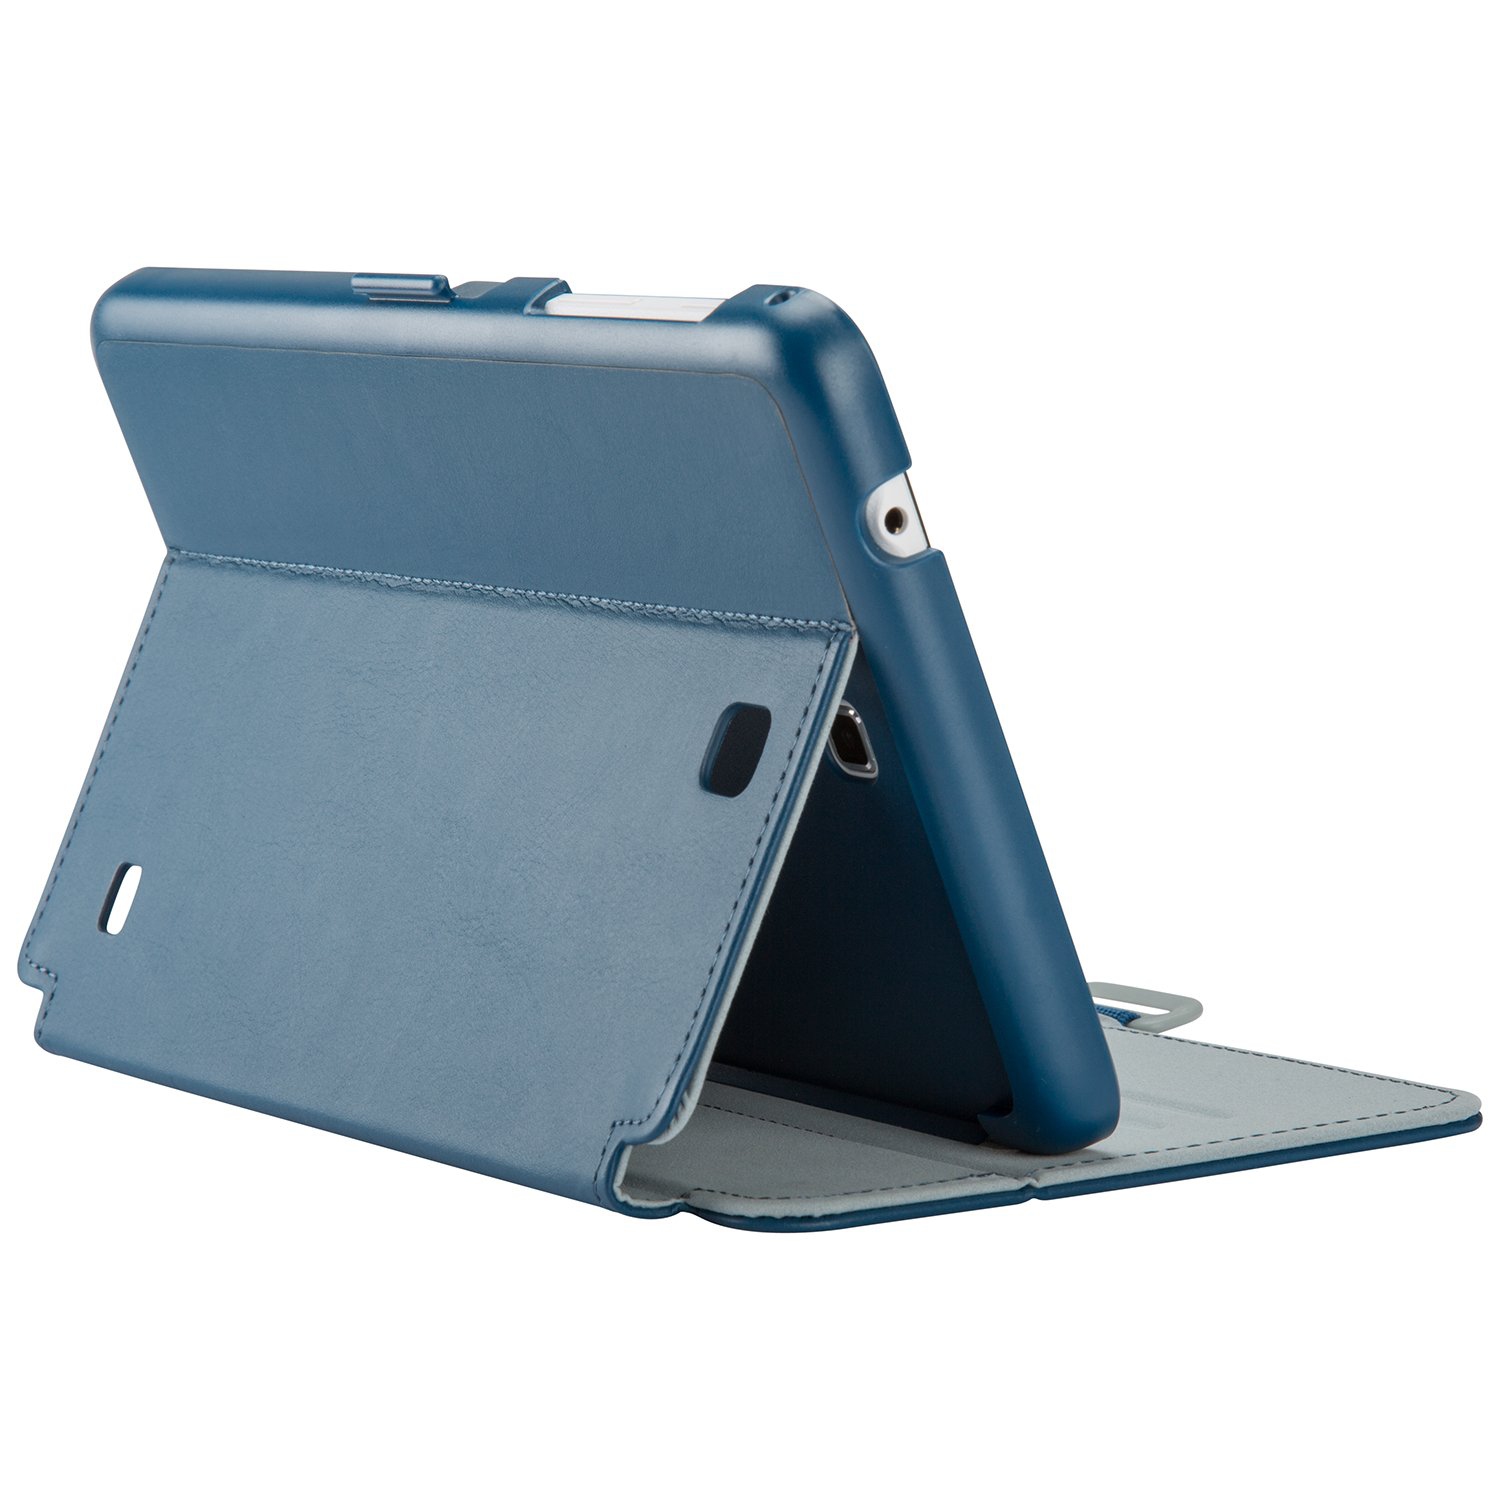 Speck Stylefolio Tablet Case Samsung Galaxy Tab S 8.4 Deep Sea Blue Nickel Grey 72440-B901